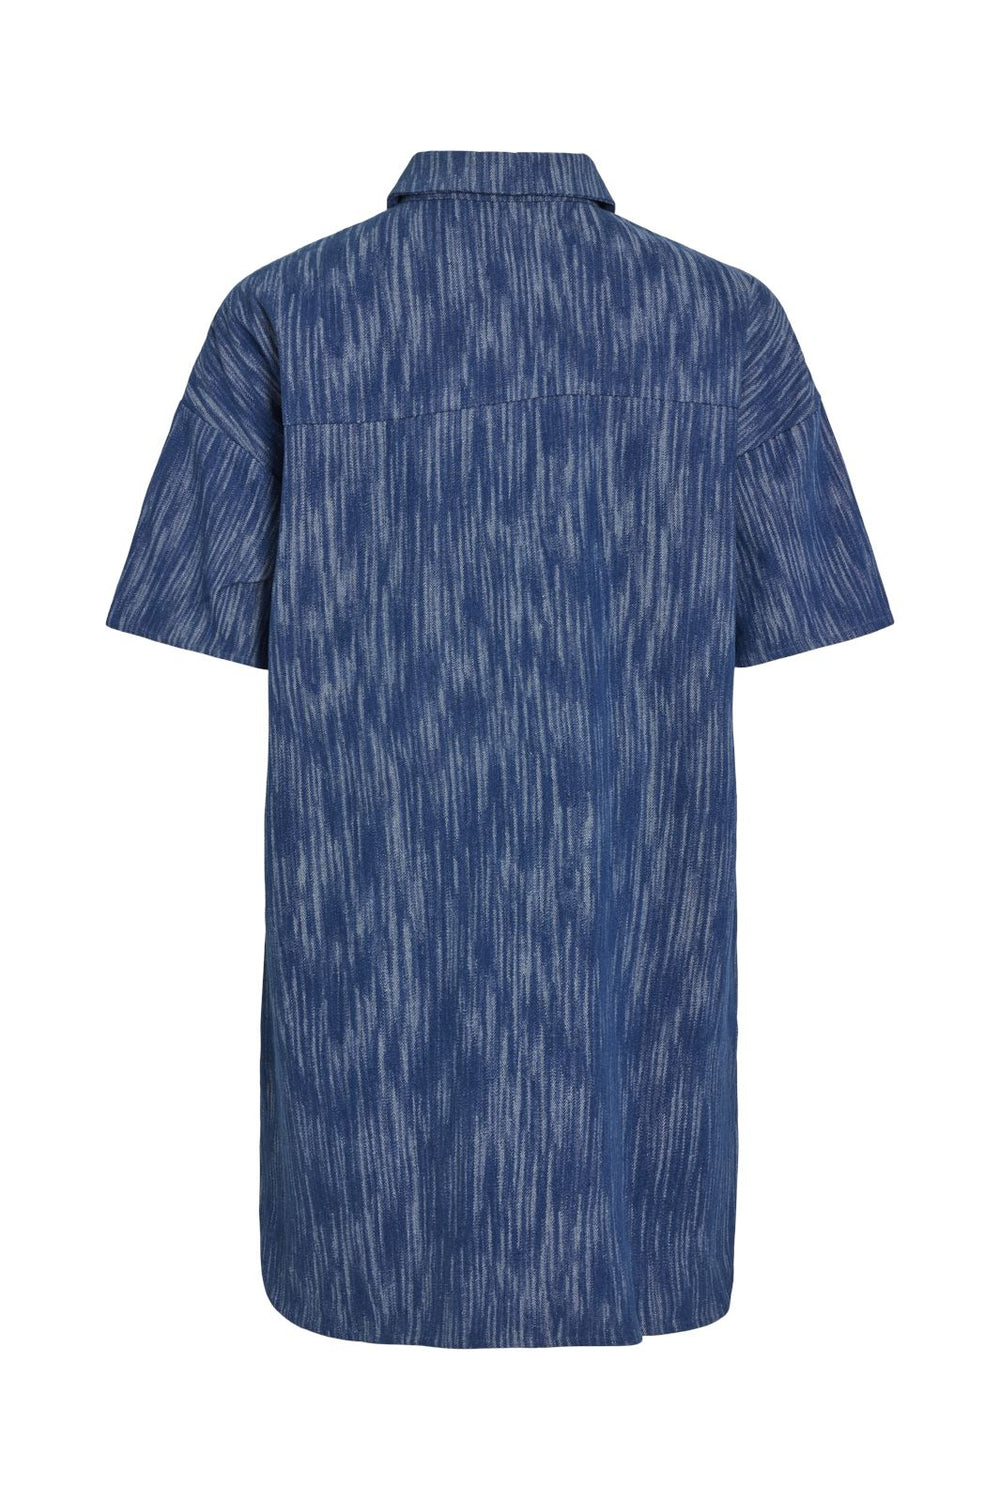 Vila - Vikubra 2/4 Demim Dress - 4734297 Medium Blue Denim Graphic